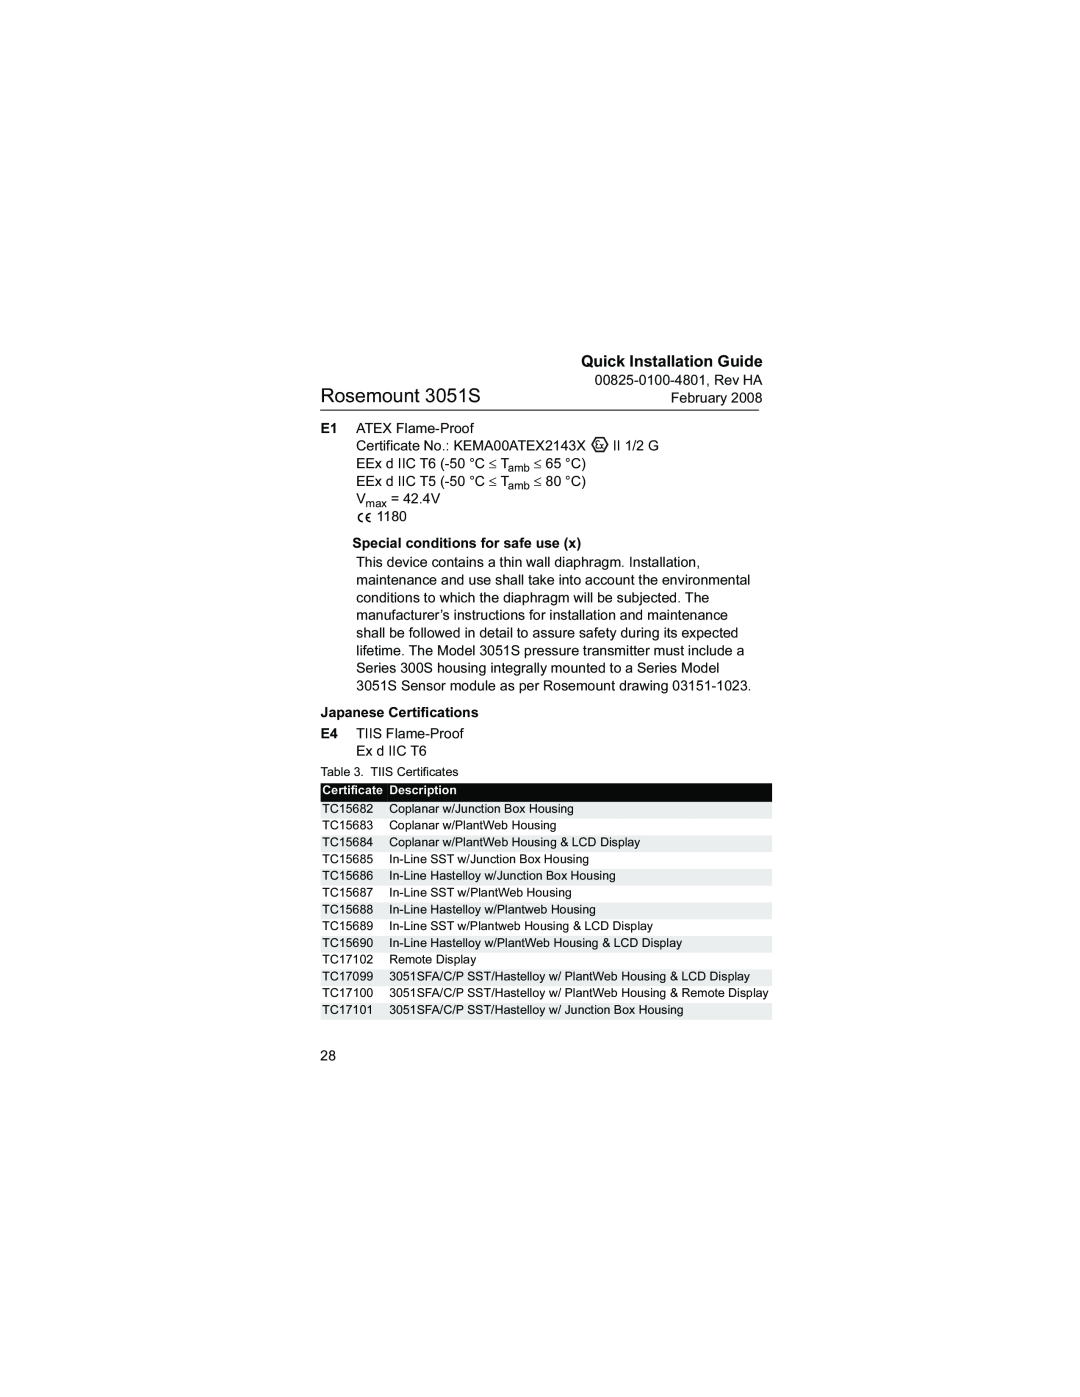 Emerson manual Rosemount 3051S, Quick Installation Guide, E1 ATEX Flame-Proof Certificate No. KEMA00ATEX2143X II 1/2 G 